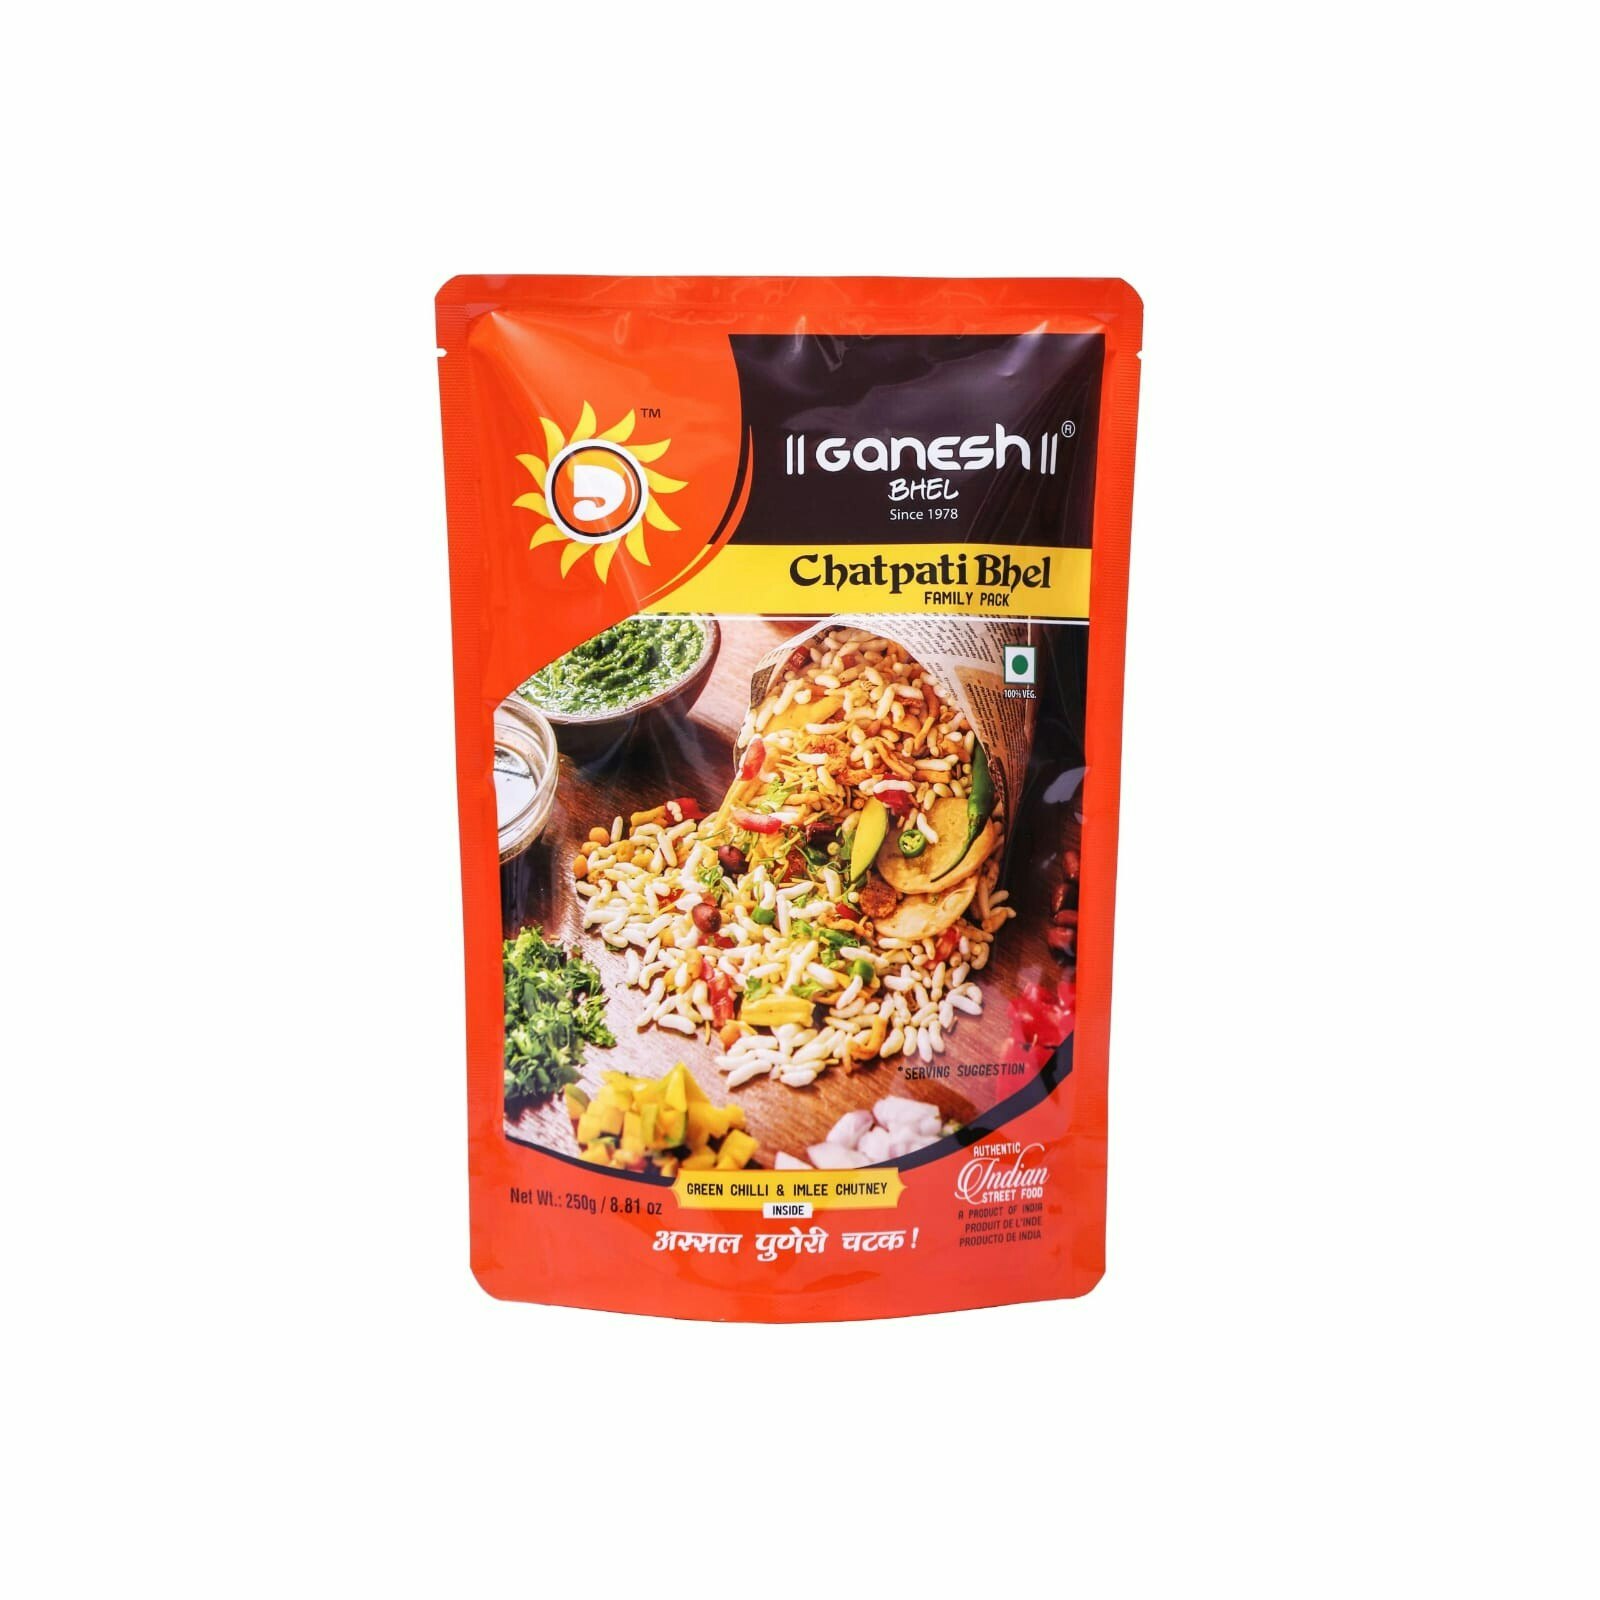 Chapati Bhel Family Pack (Ganesh Bhel) 300g